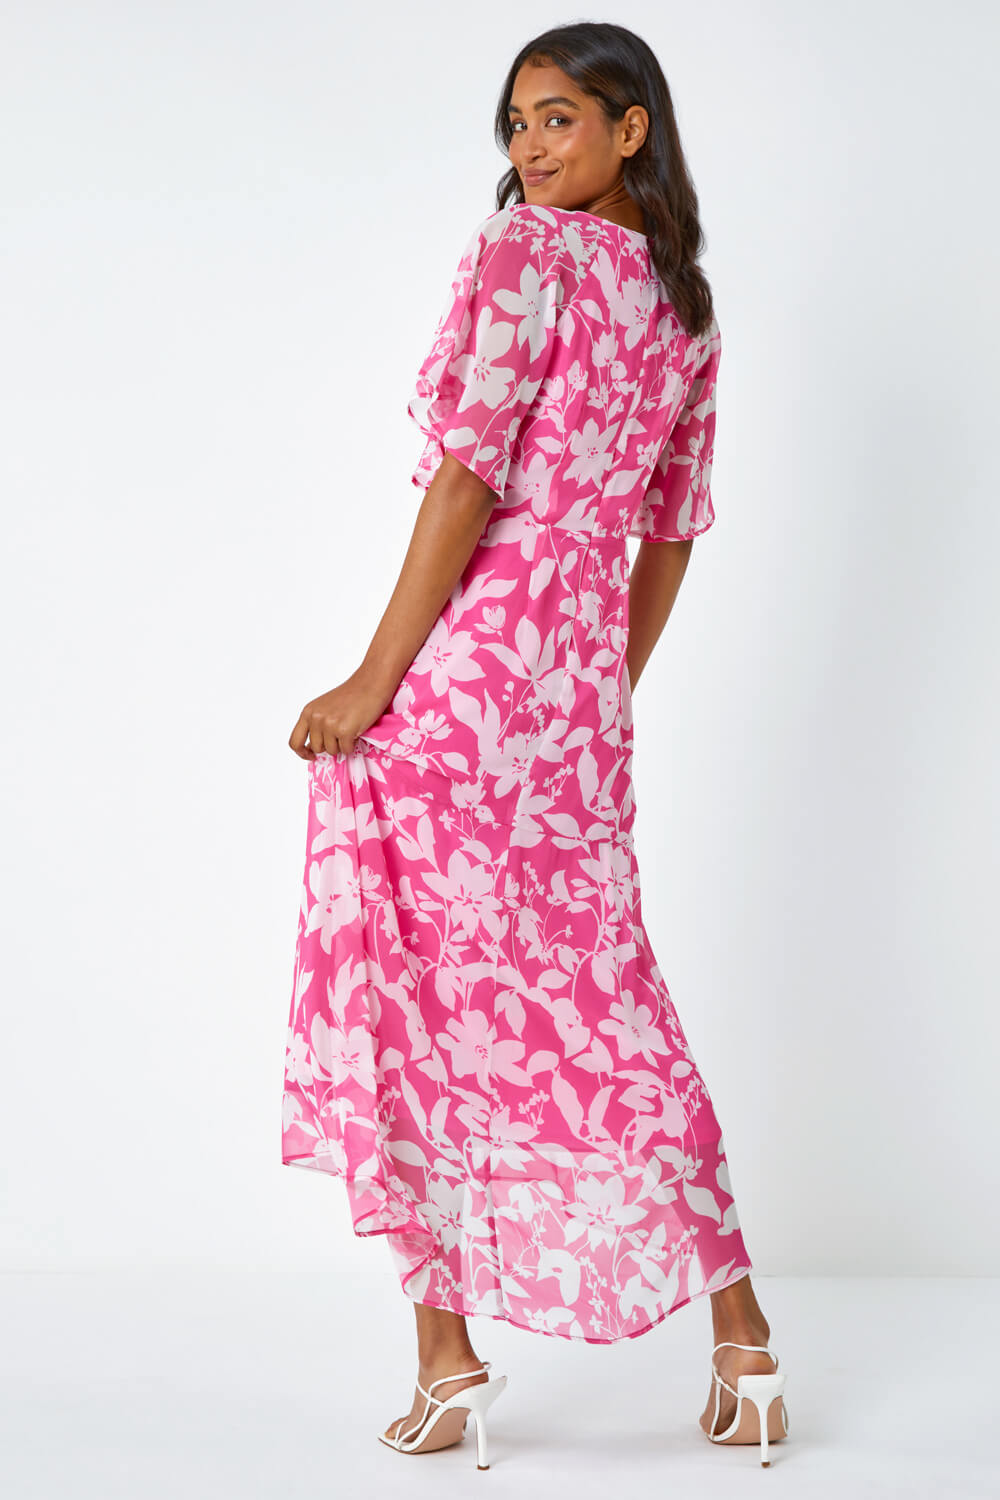 PINK Floral Frill Detail Chiffon Midi Dress, Image 3 of 5